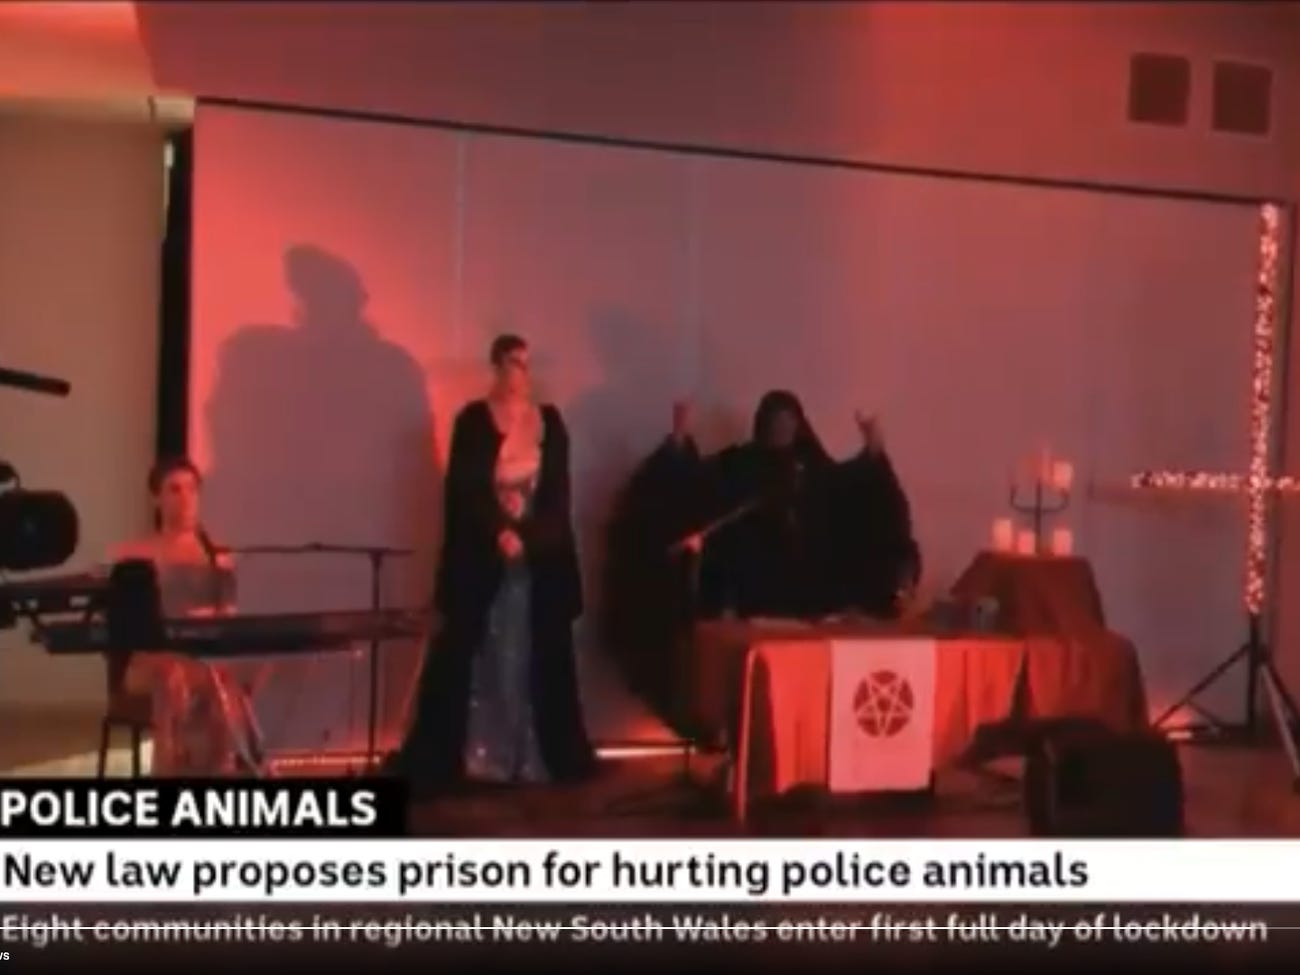 ‘Hail, Satan!’ — An Australian broadcaster accidentally ran footage of a satanic ritual during a news segment on police dog welfare